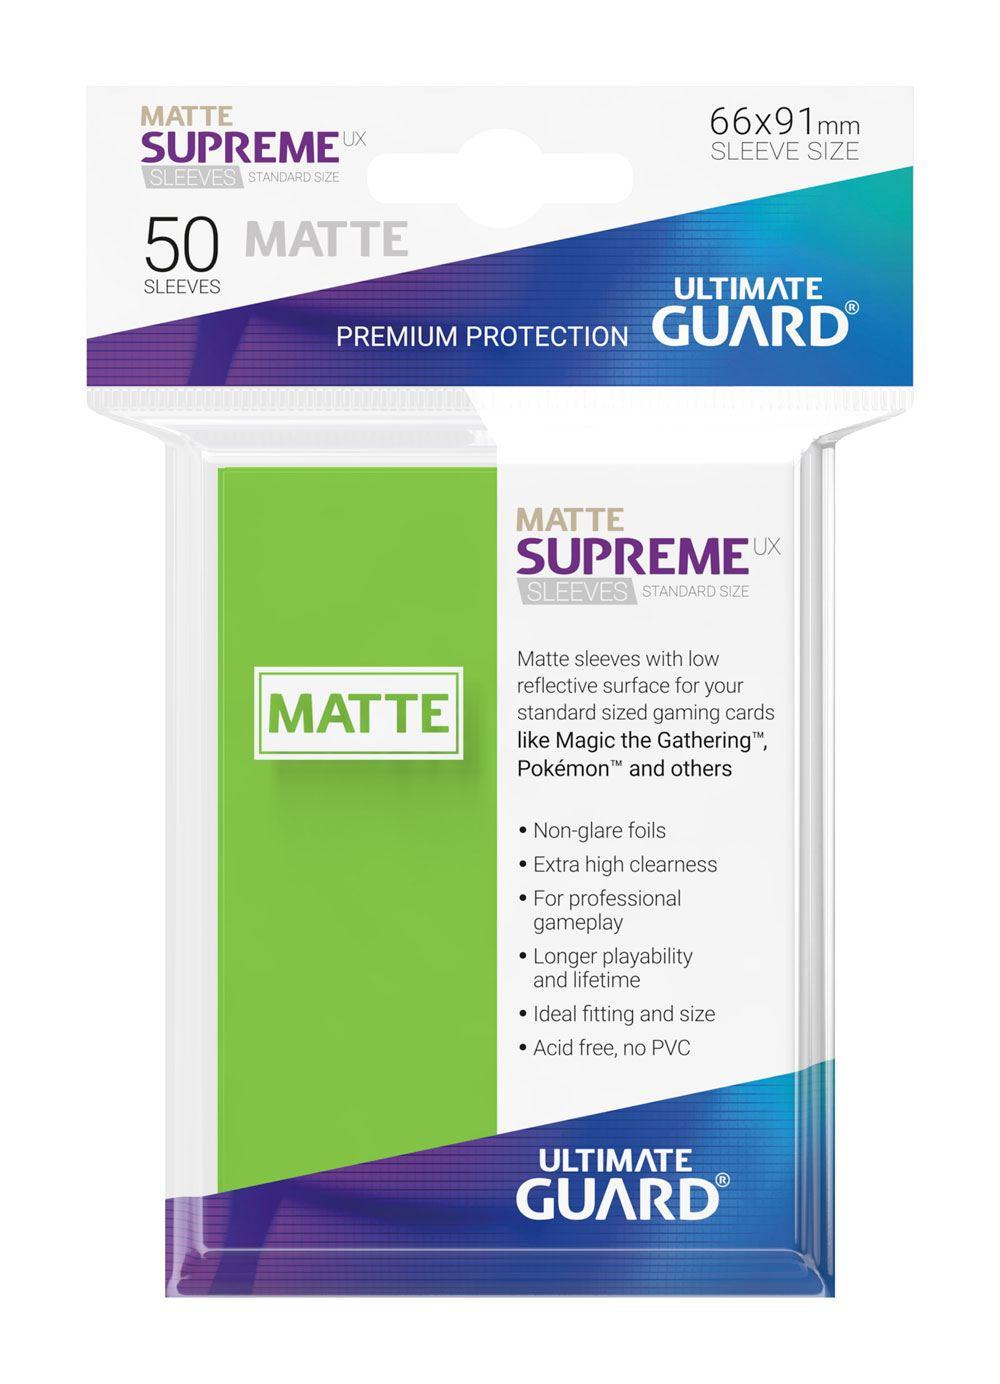 Matte Supreme UX Sleeves - 66x91 mm (50), Light Green